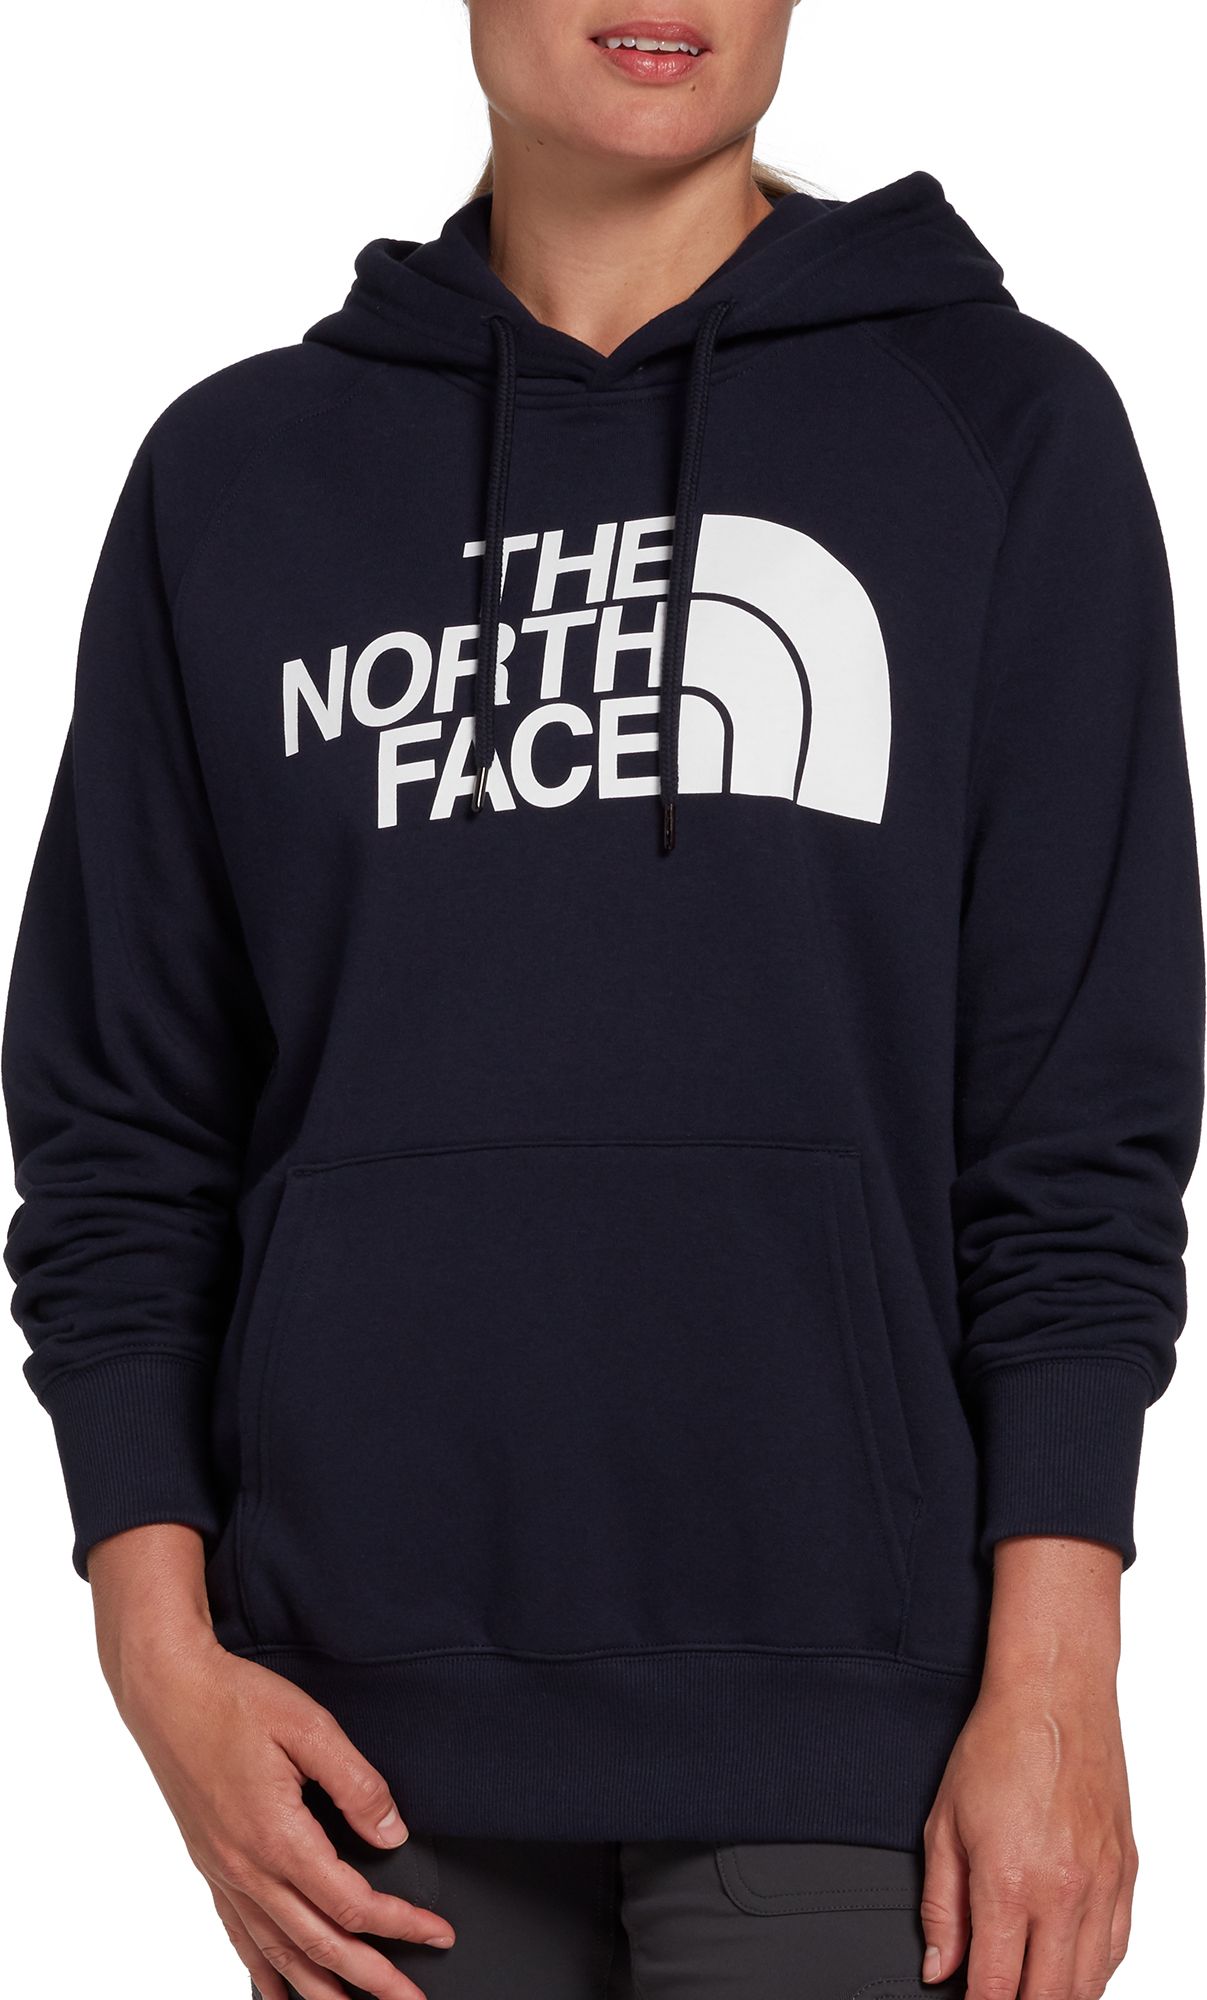 north face zip ups